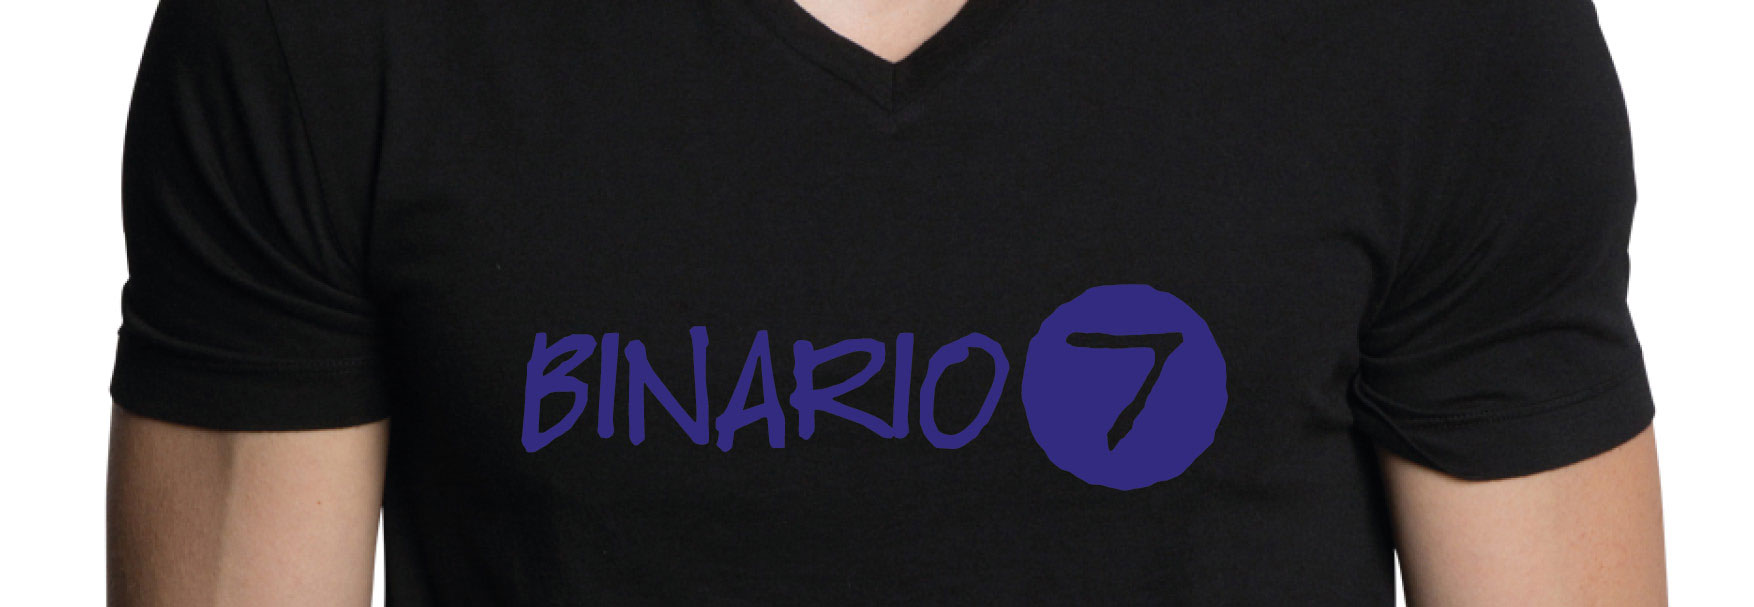 tshirt binario7